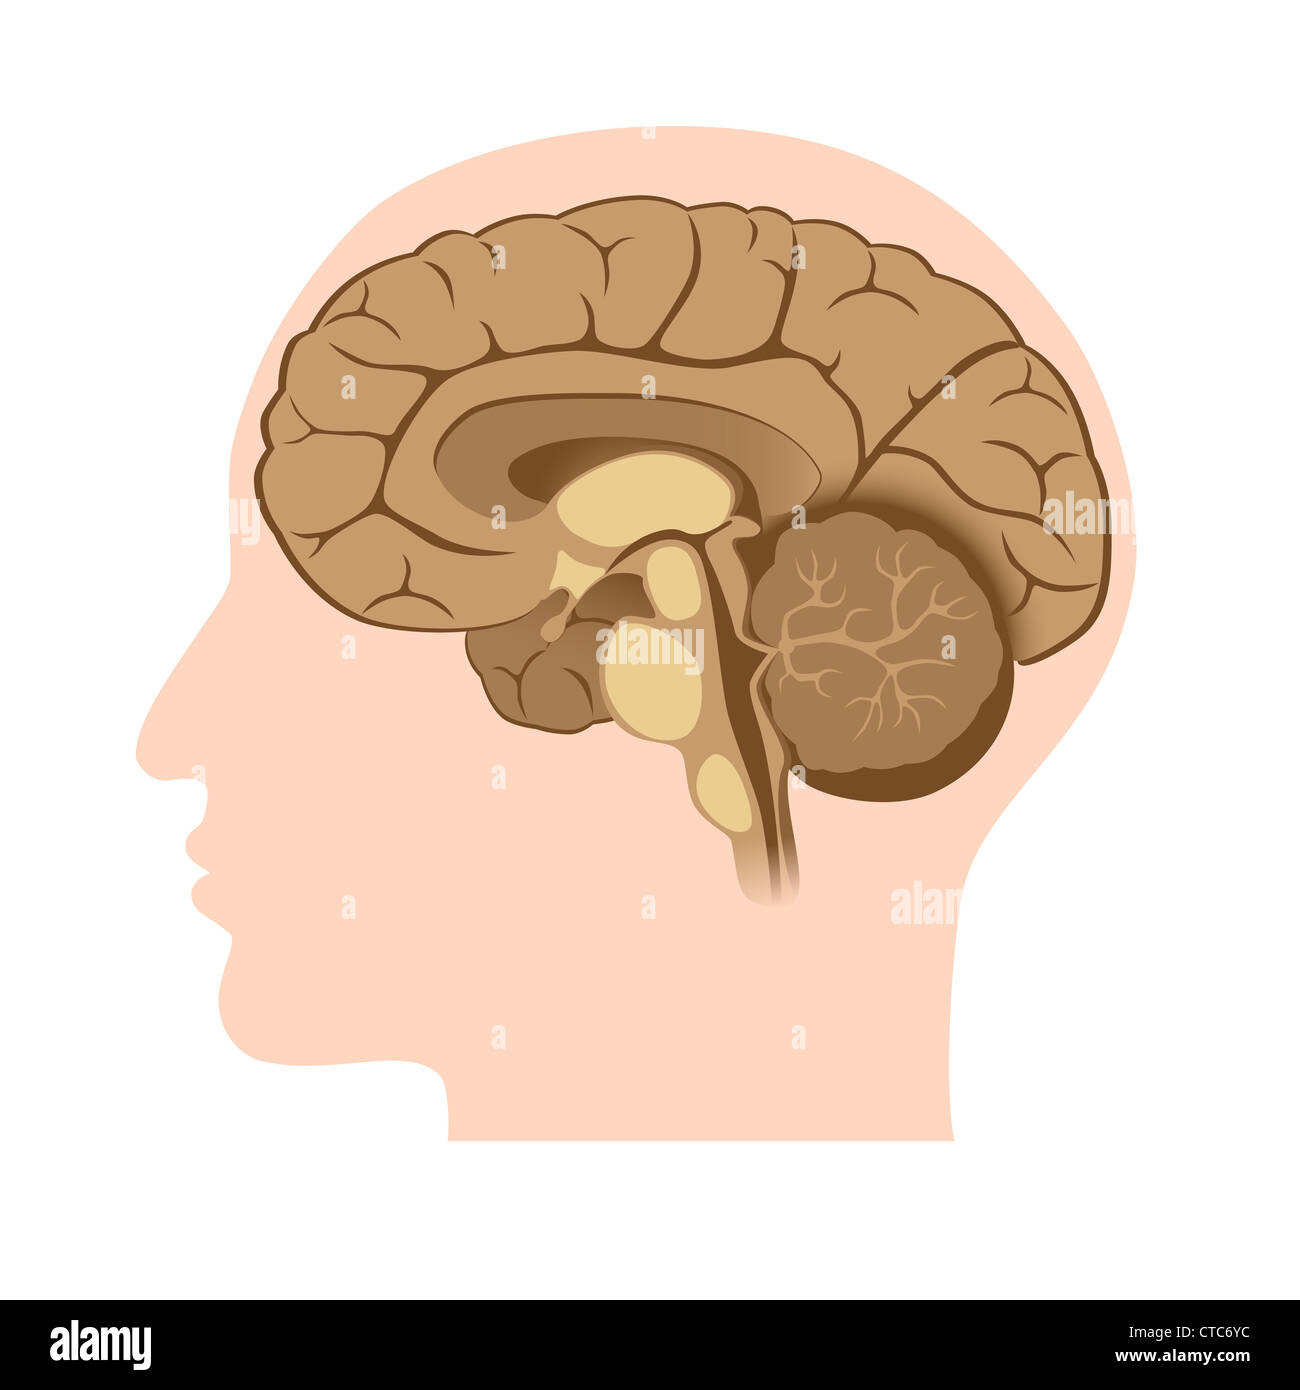 Cervello umano anatomia Foto Stock